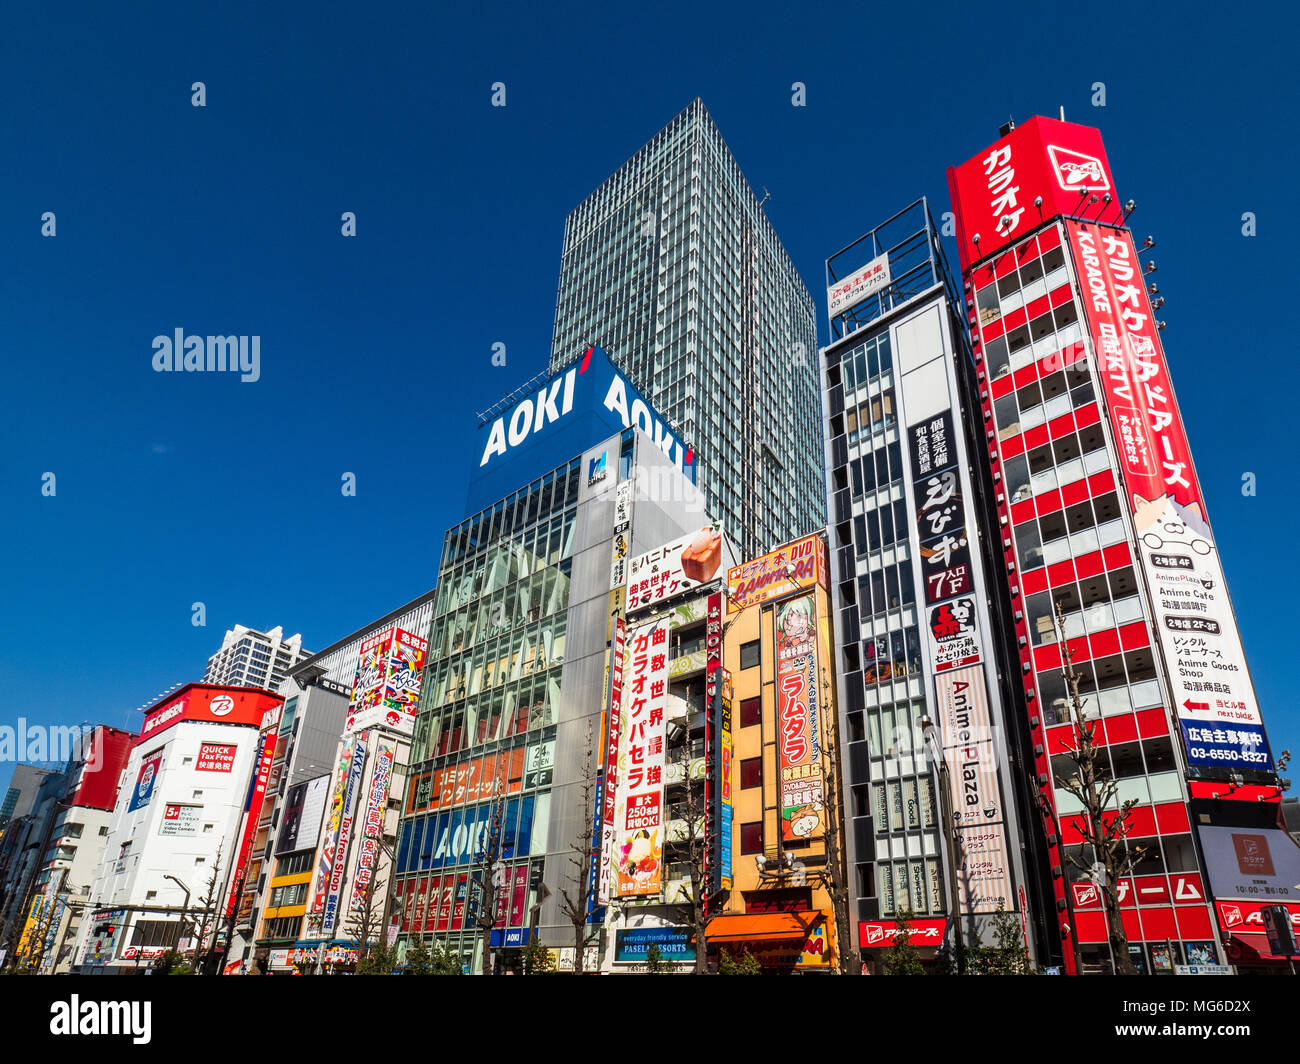 Japan Akihabara Electric Town Tokio. Dynamisches Tokio - Akihabara Electronic Town in Tokio Japan im Sonnenschein Stockfoto